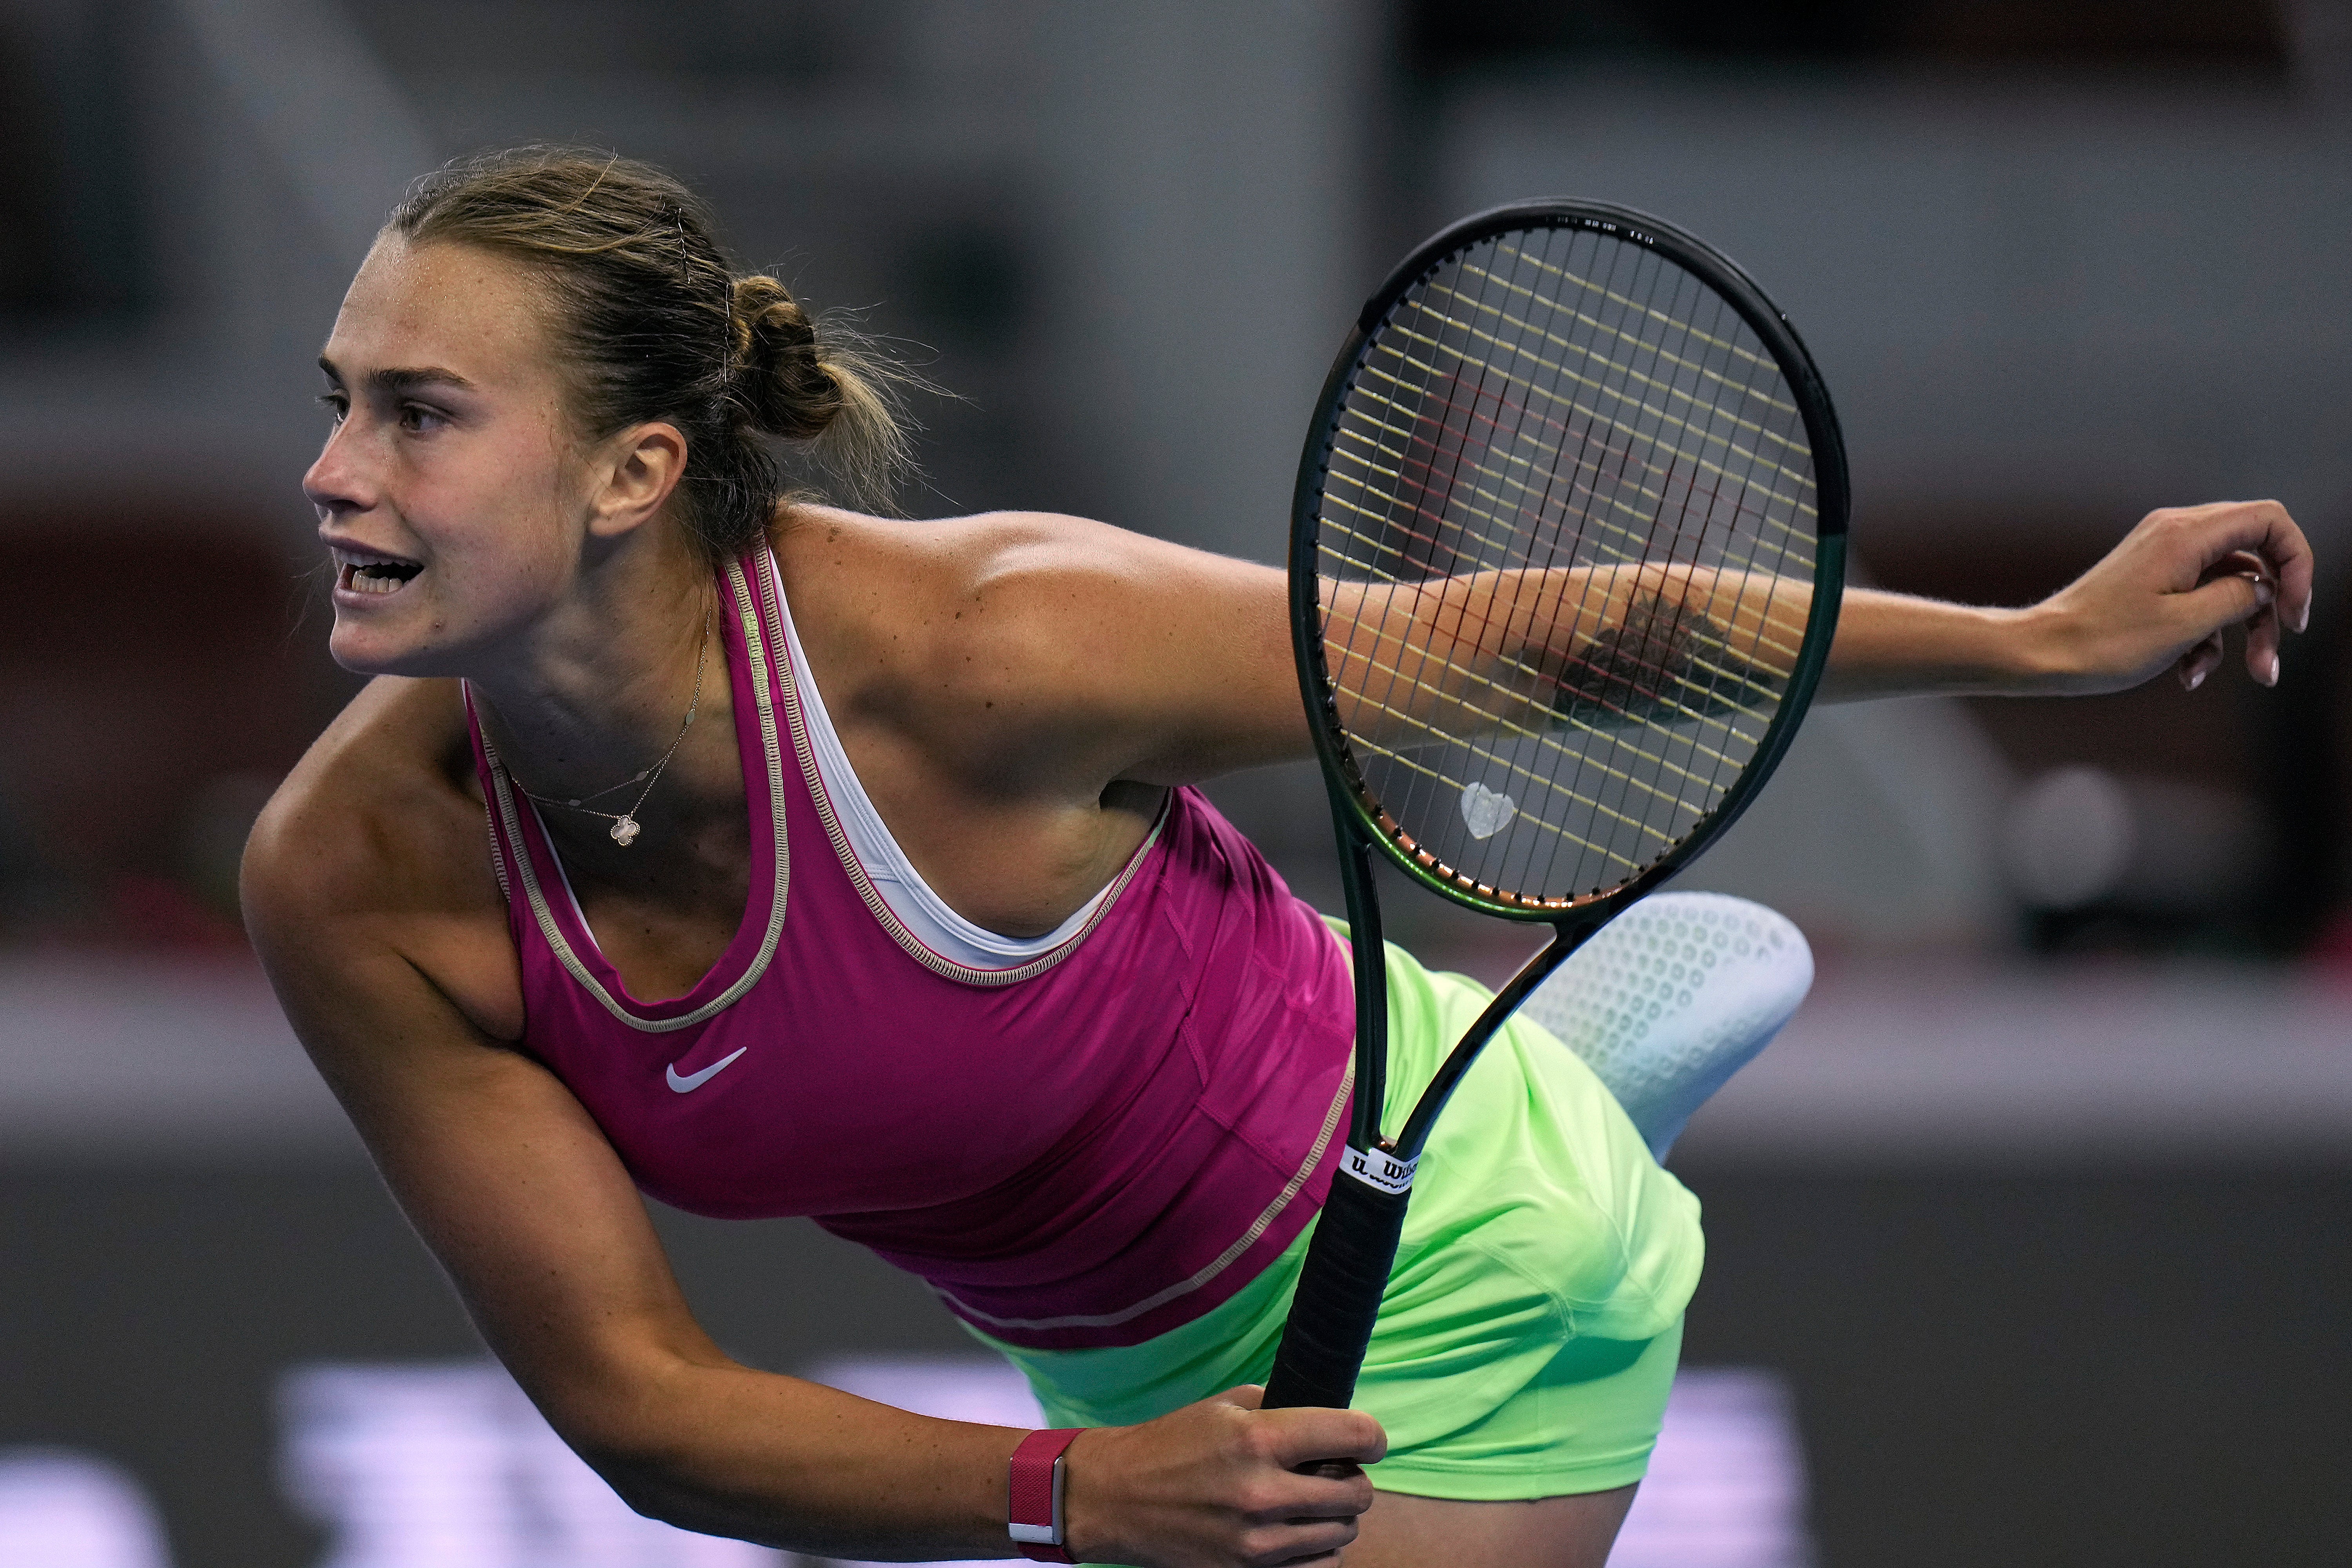 Aryna Sabalenka has been working on her serve ahead of the Australian Open